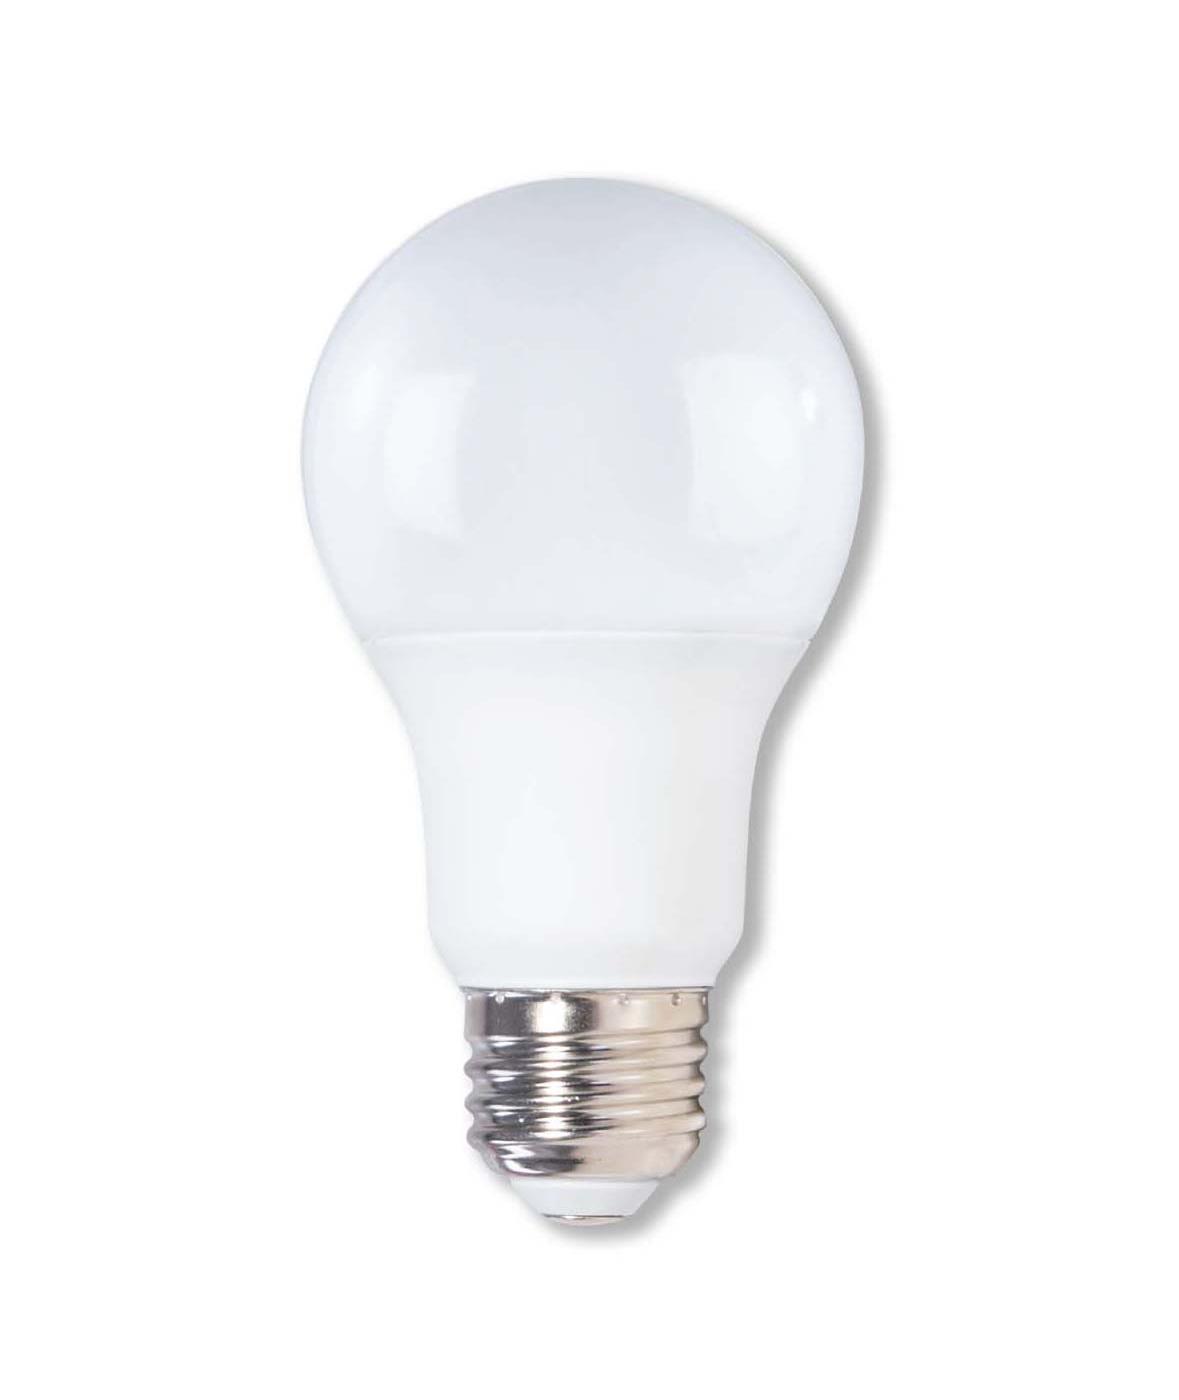 H-E-B Double Life A19 75-Watt LED Light Bulbs - Bright White; image 2 of 2